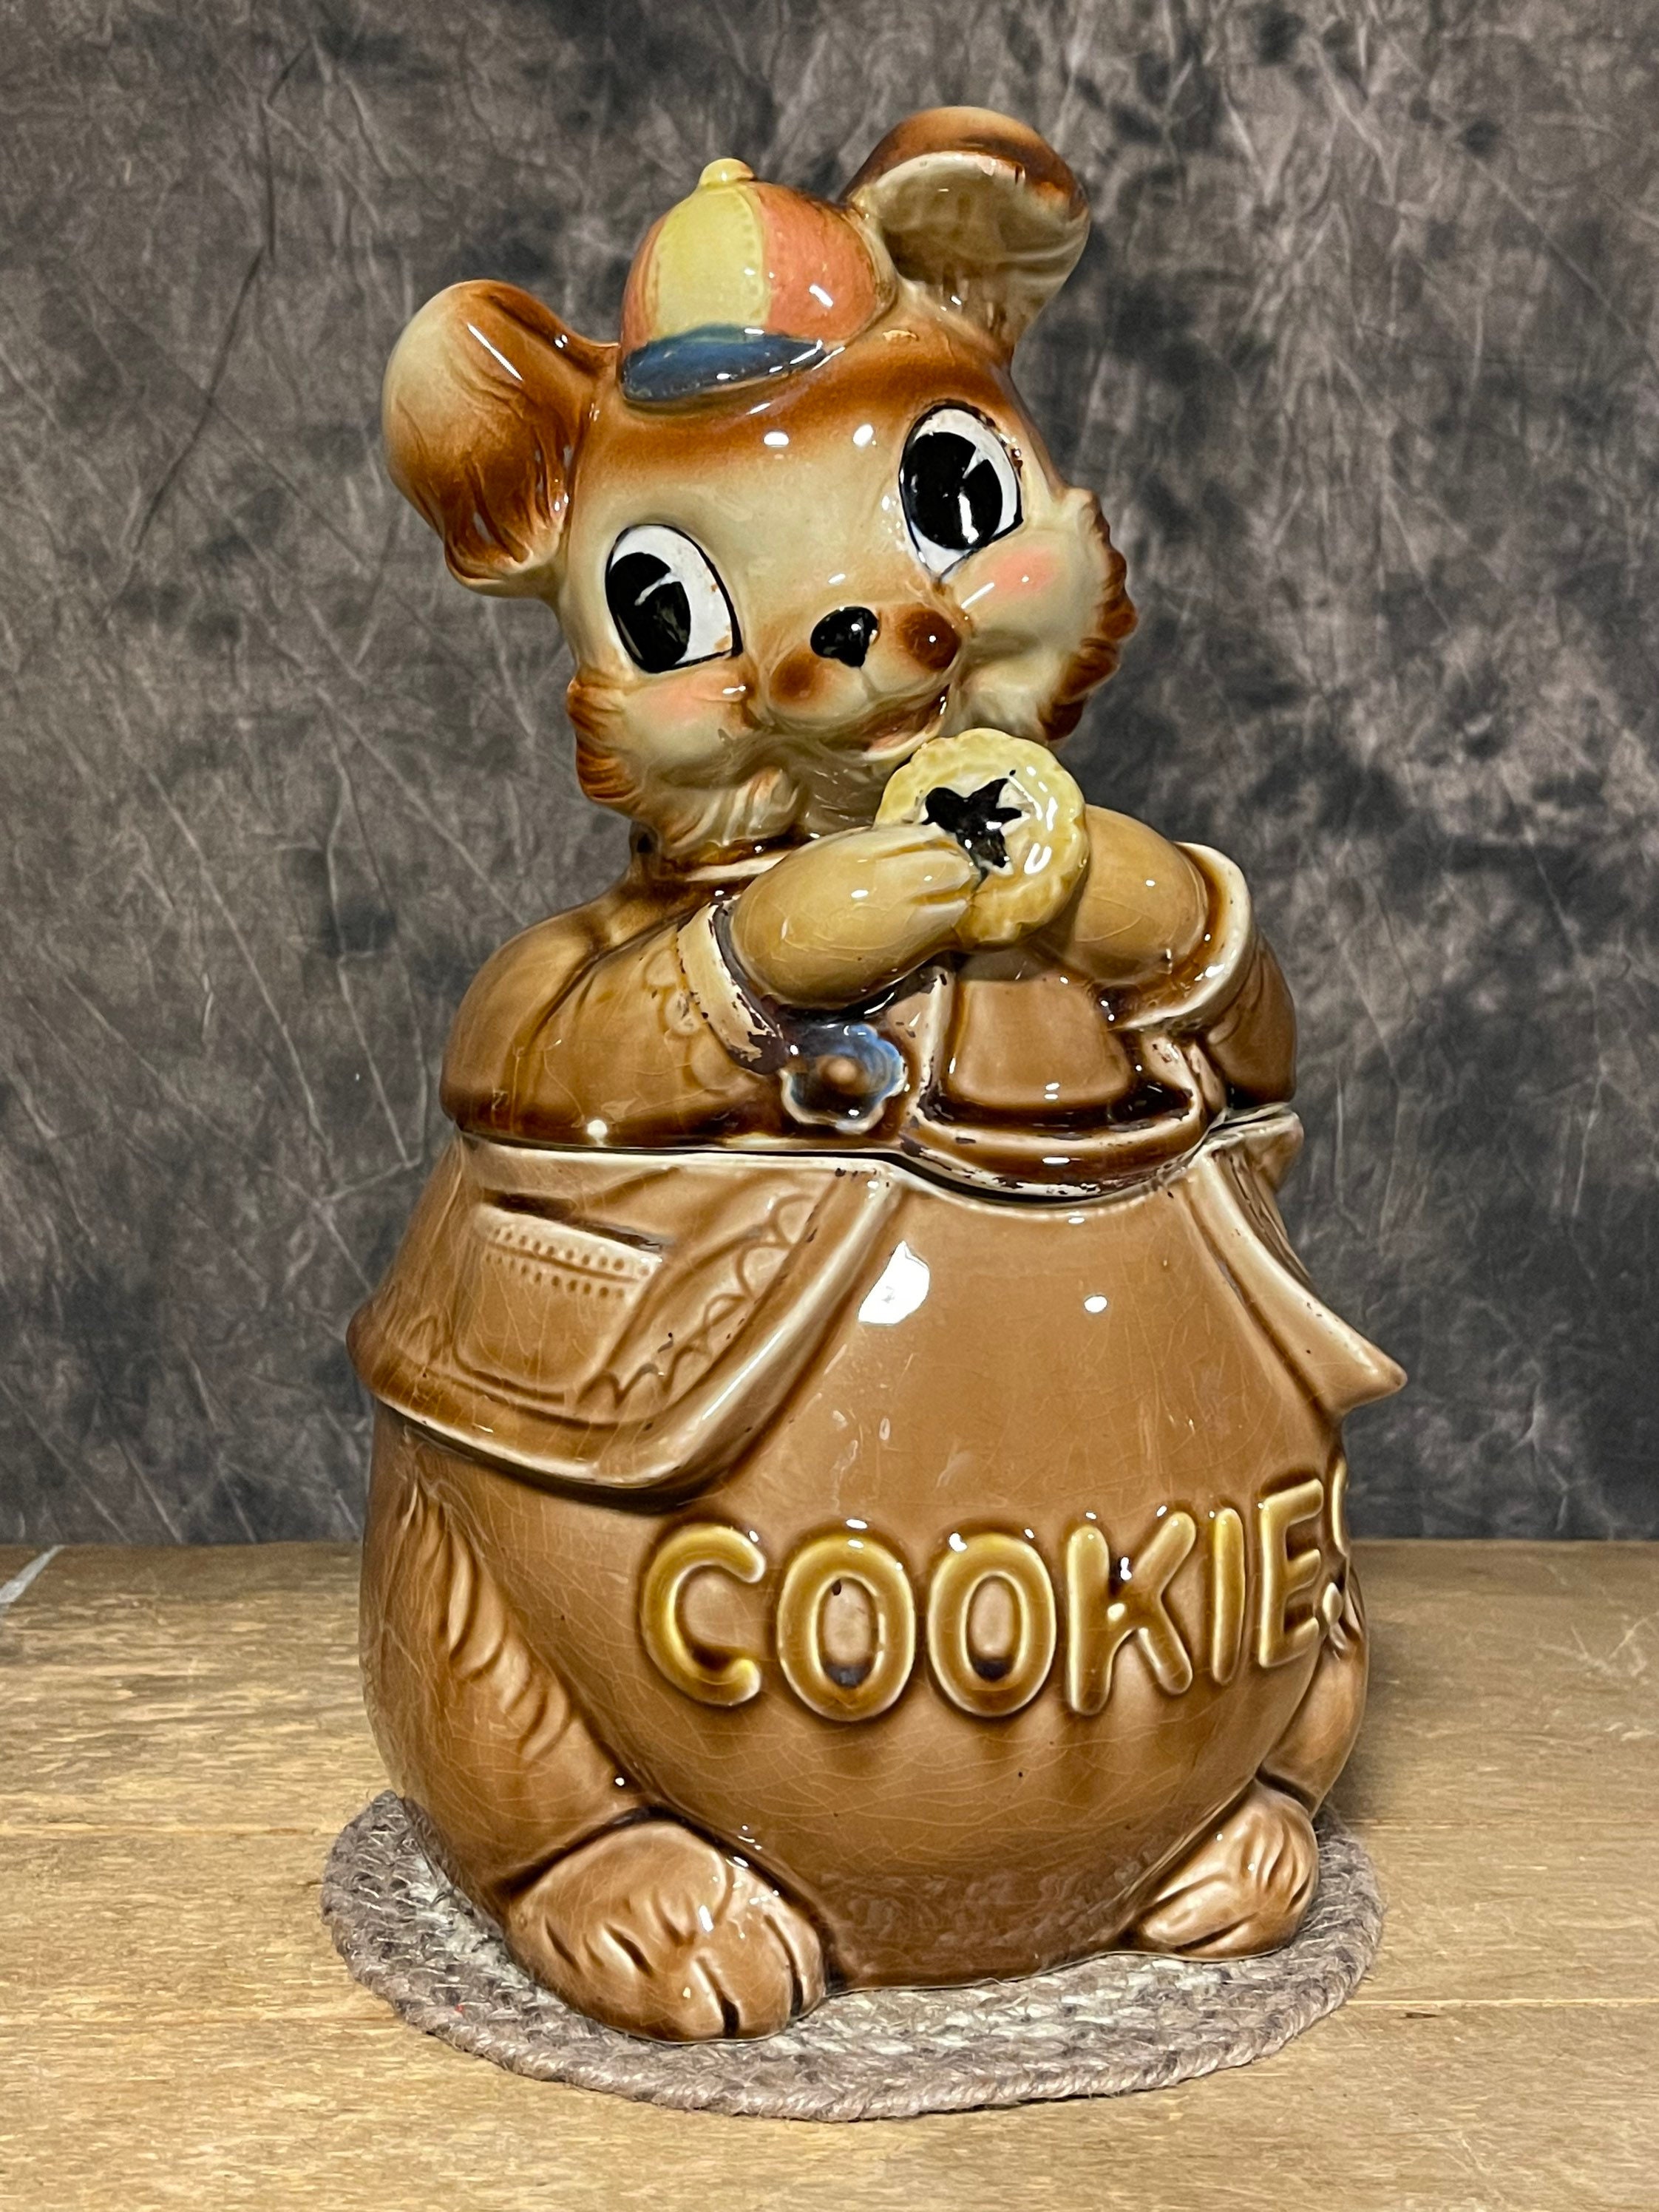 AIZOEVCN Flowers Rabbit Embossed Small Ceramic Cookie Jar 180ml, 3 W x 4.8  H Handmade Cute Print Candy Jars, Vintage Decorative Cookie Jars for